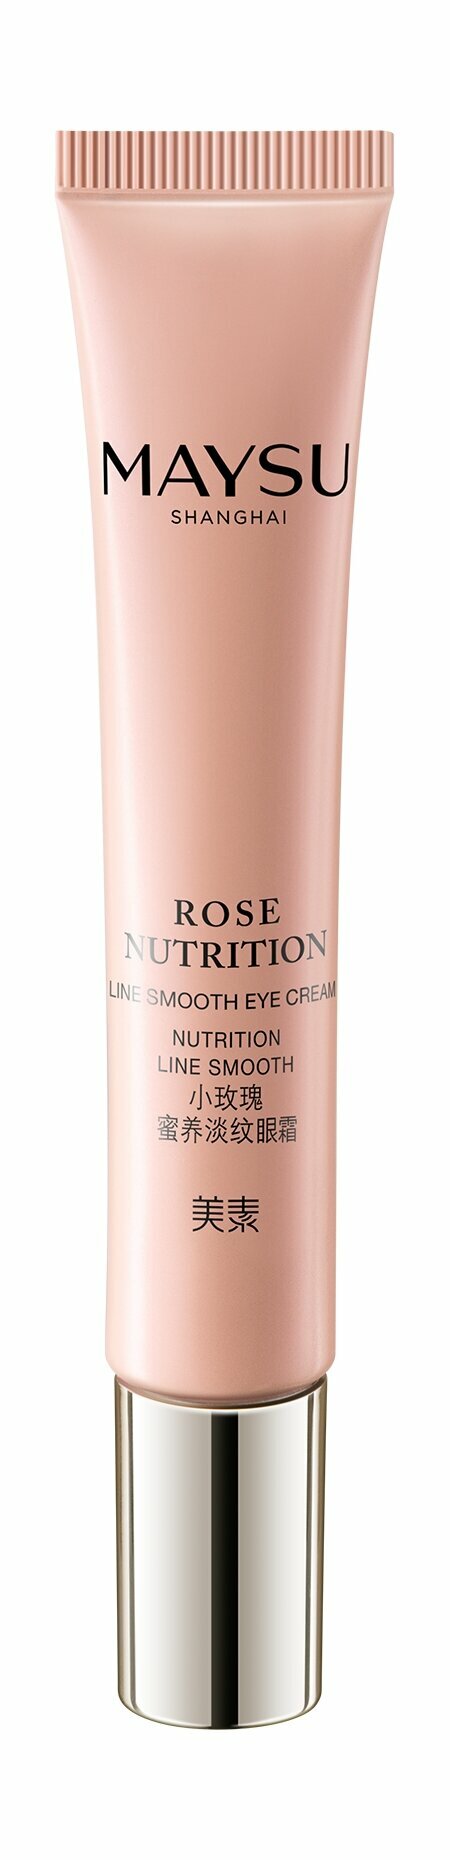 MAYSU SHANGHAI Rose Nutrition Eye Cream Крем для области вокруг глаз питающий, смягчающий, 18 г